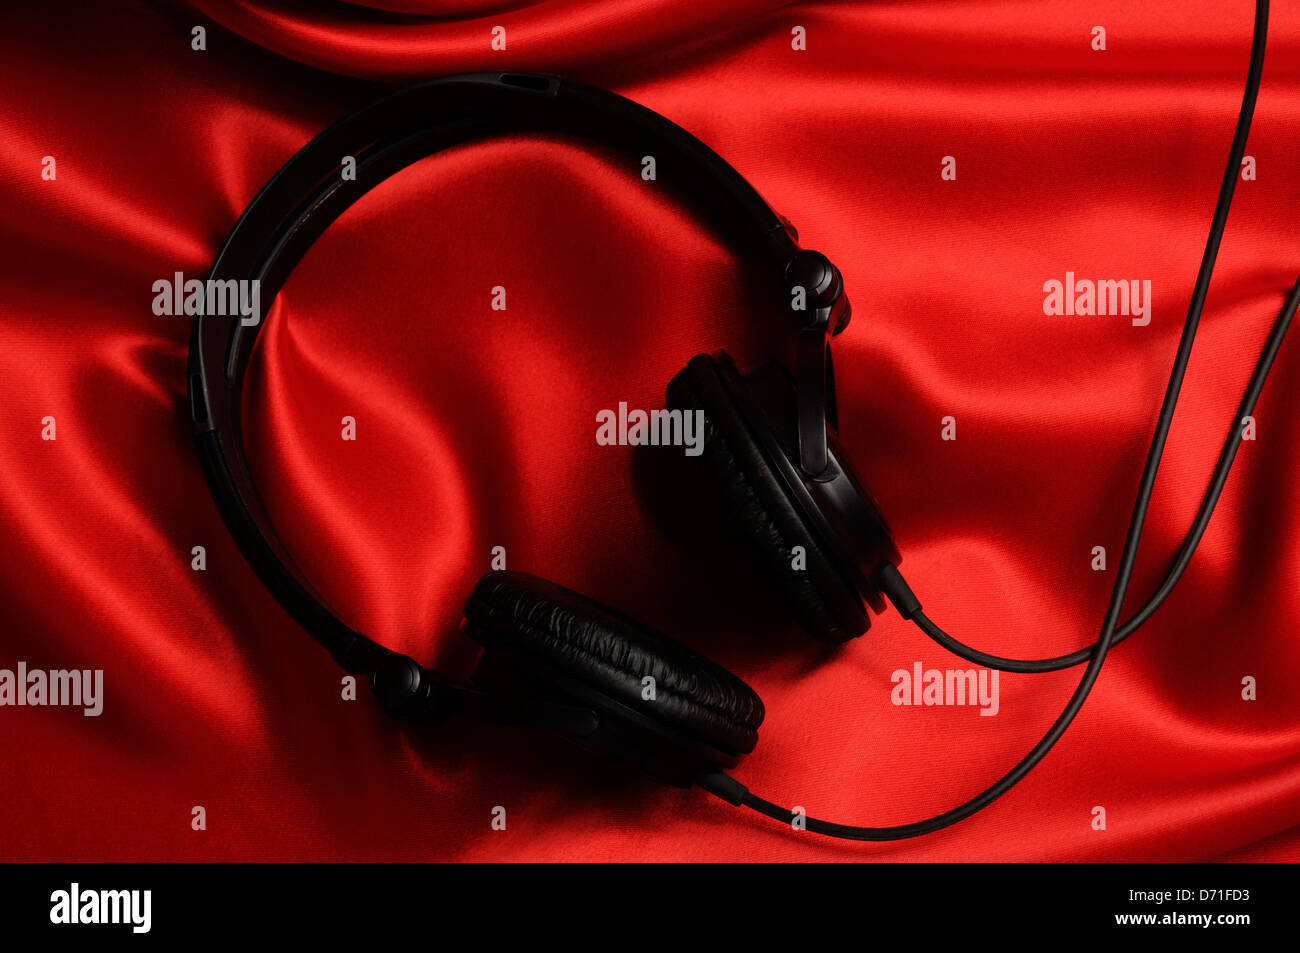 Headphones on red satin background. Stock Photo